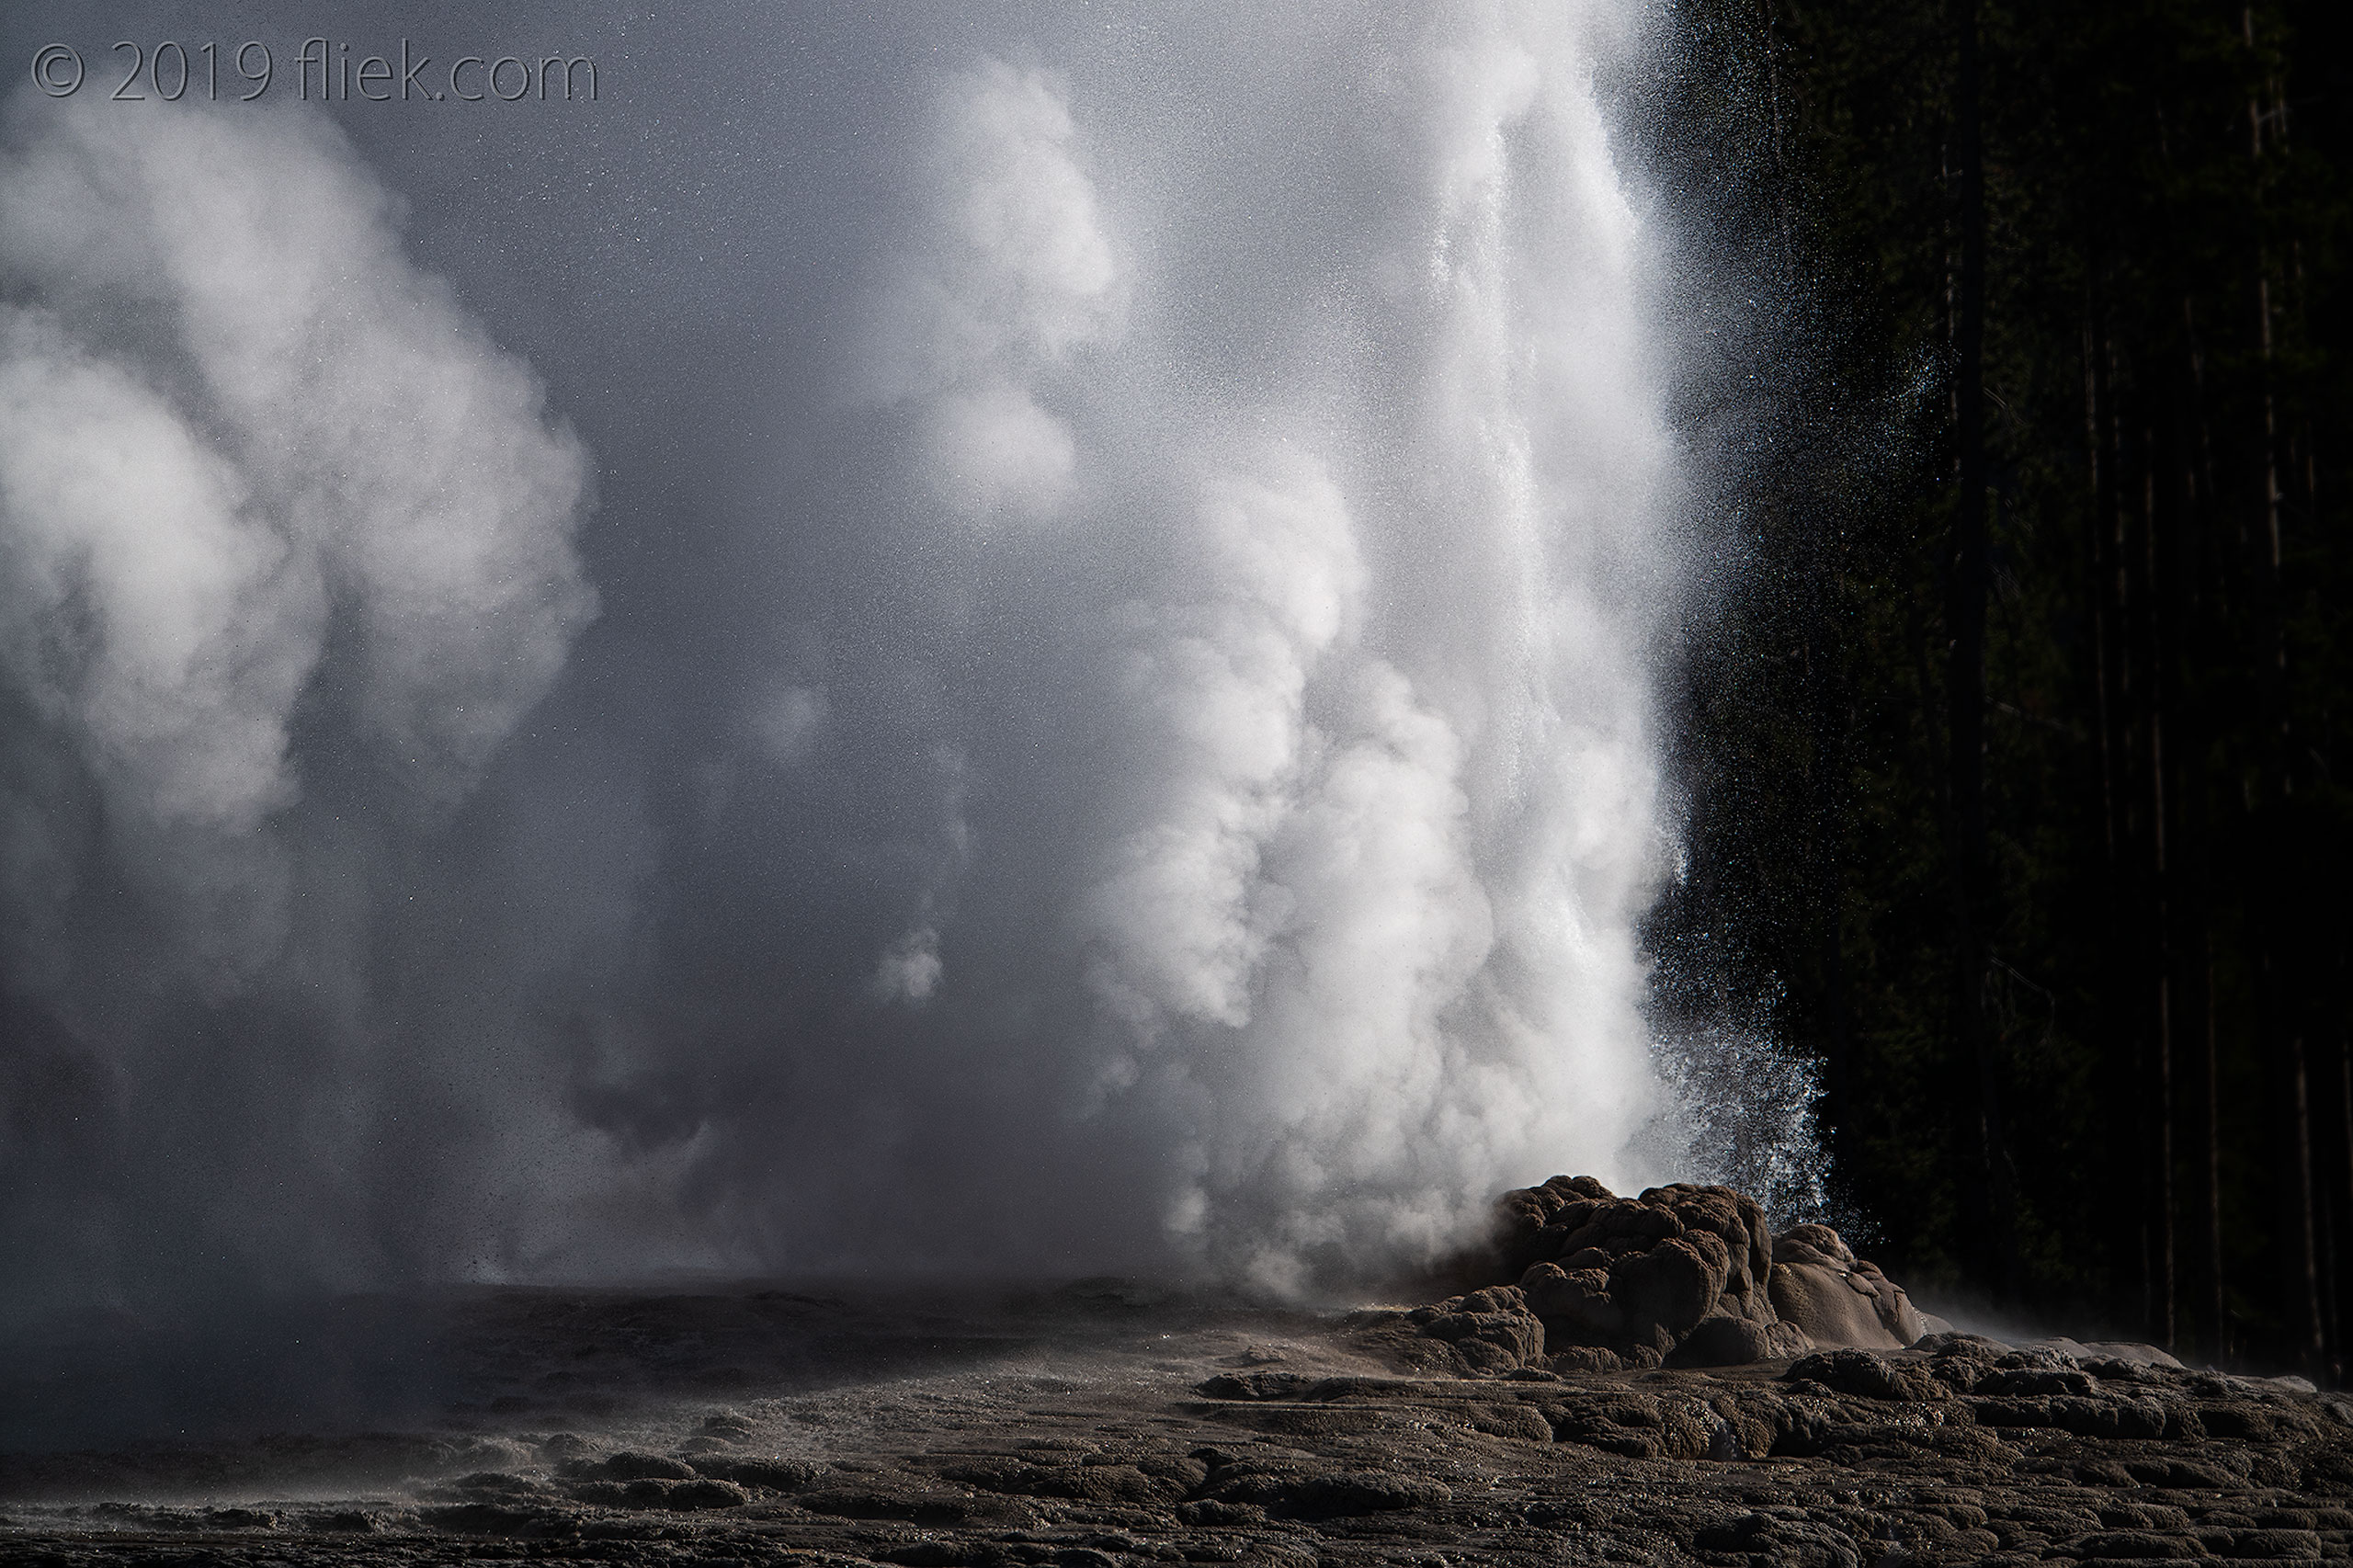 Yellowstone: &lt;br&gt;&lt;i&gt; Using the Nikon 600mm f/4E FL super telephoto lens for... landscapes (?) &lt;/i&gt;